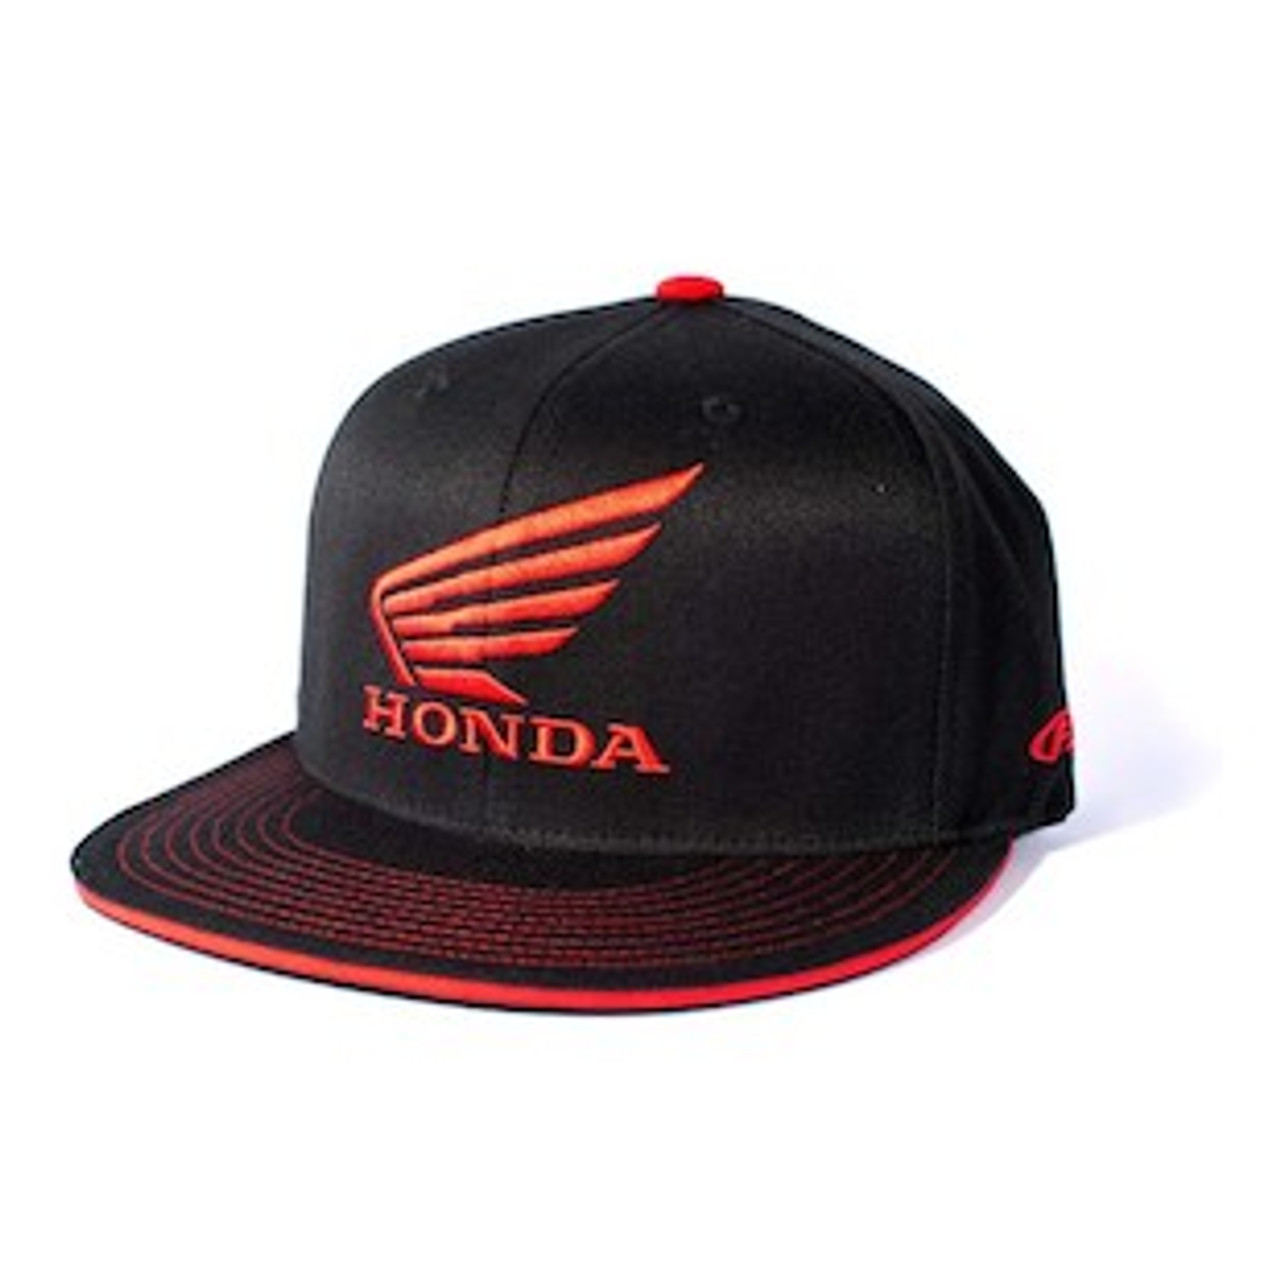 Honda Cycle Hat|Baseball Colorado of Preformance Wing Hat|Honda Cap - Factory Effex Flexfit